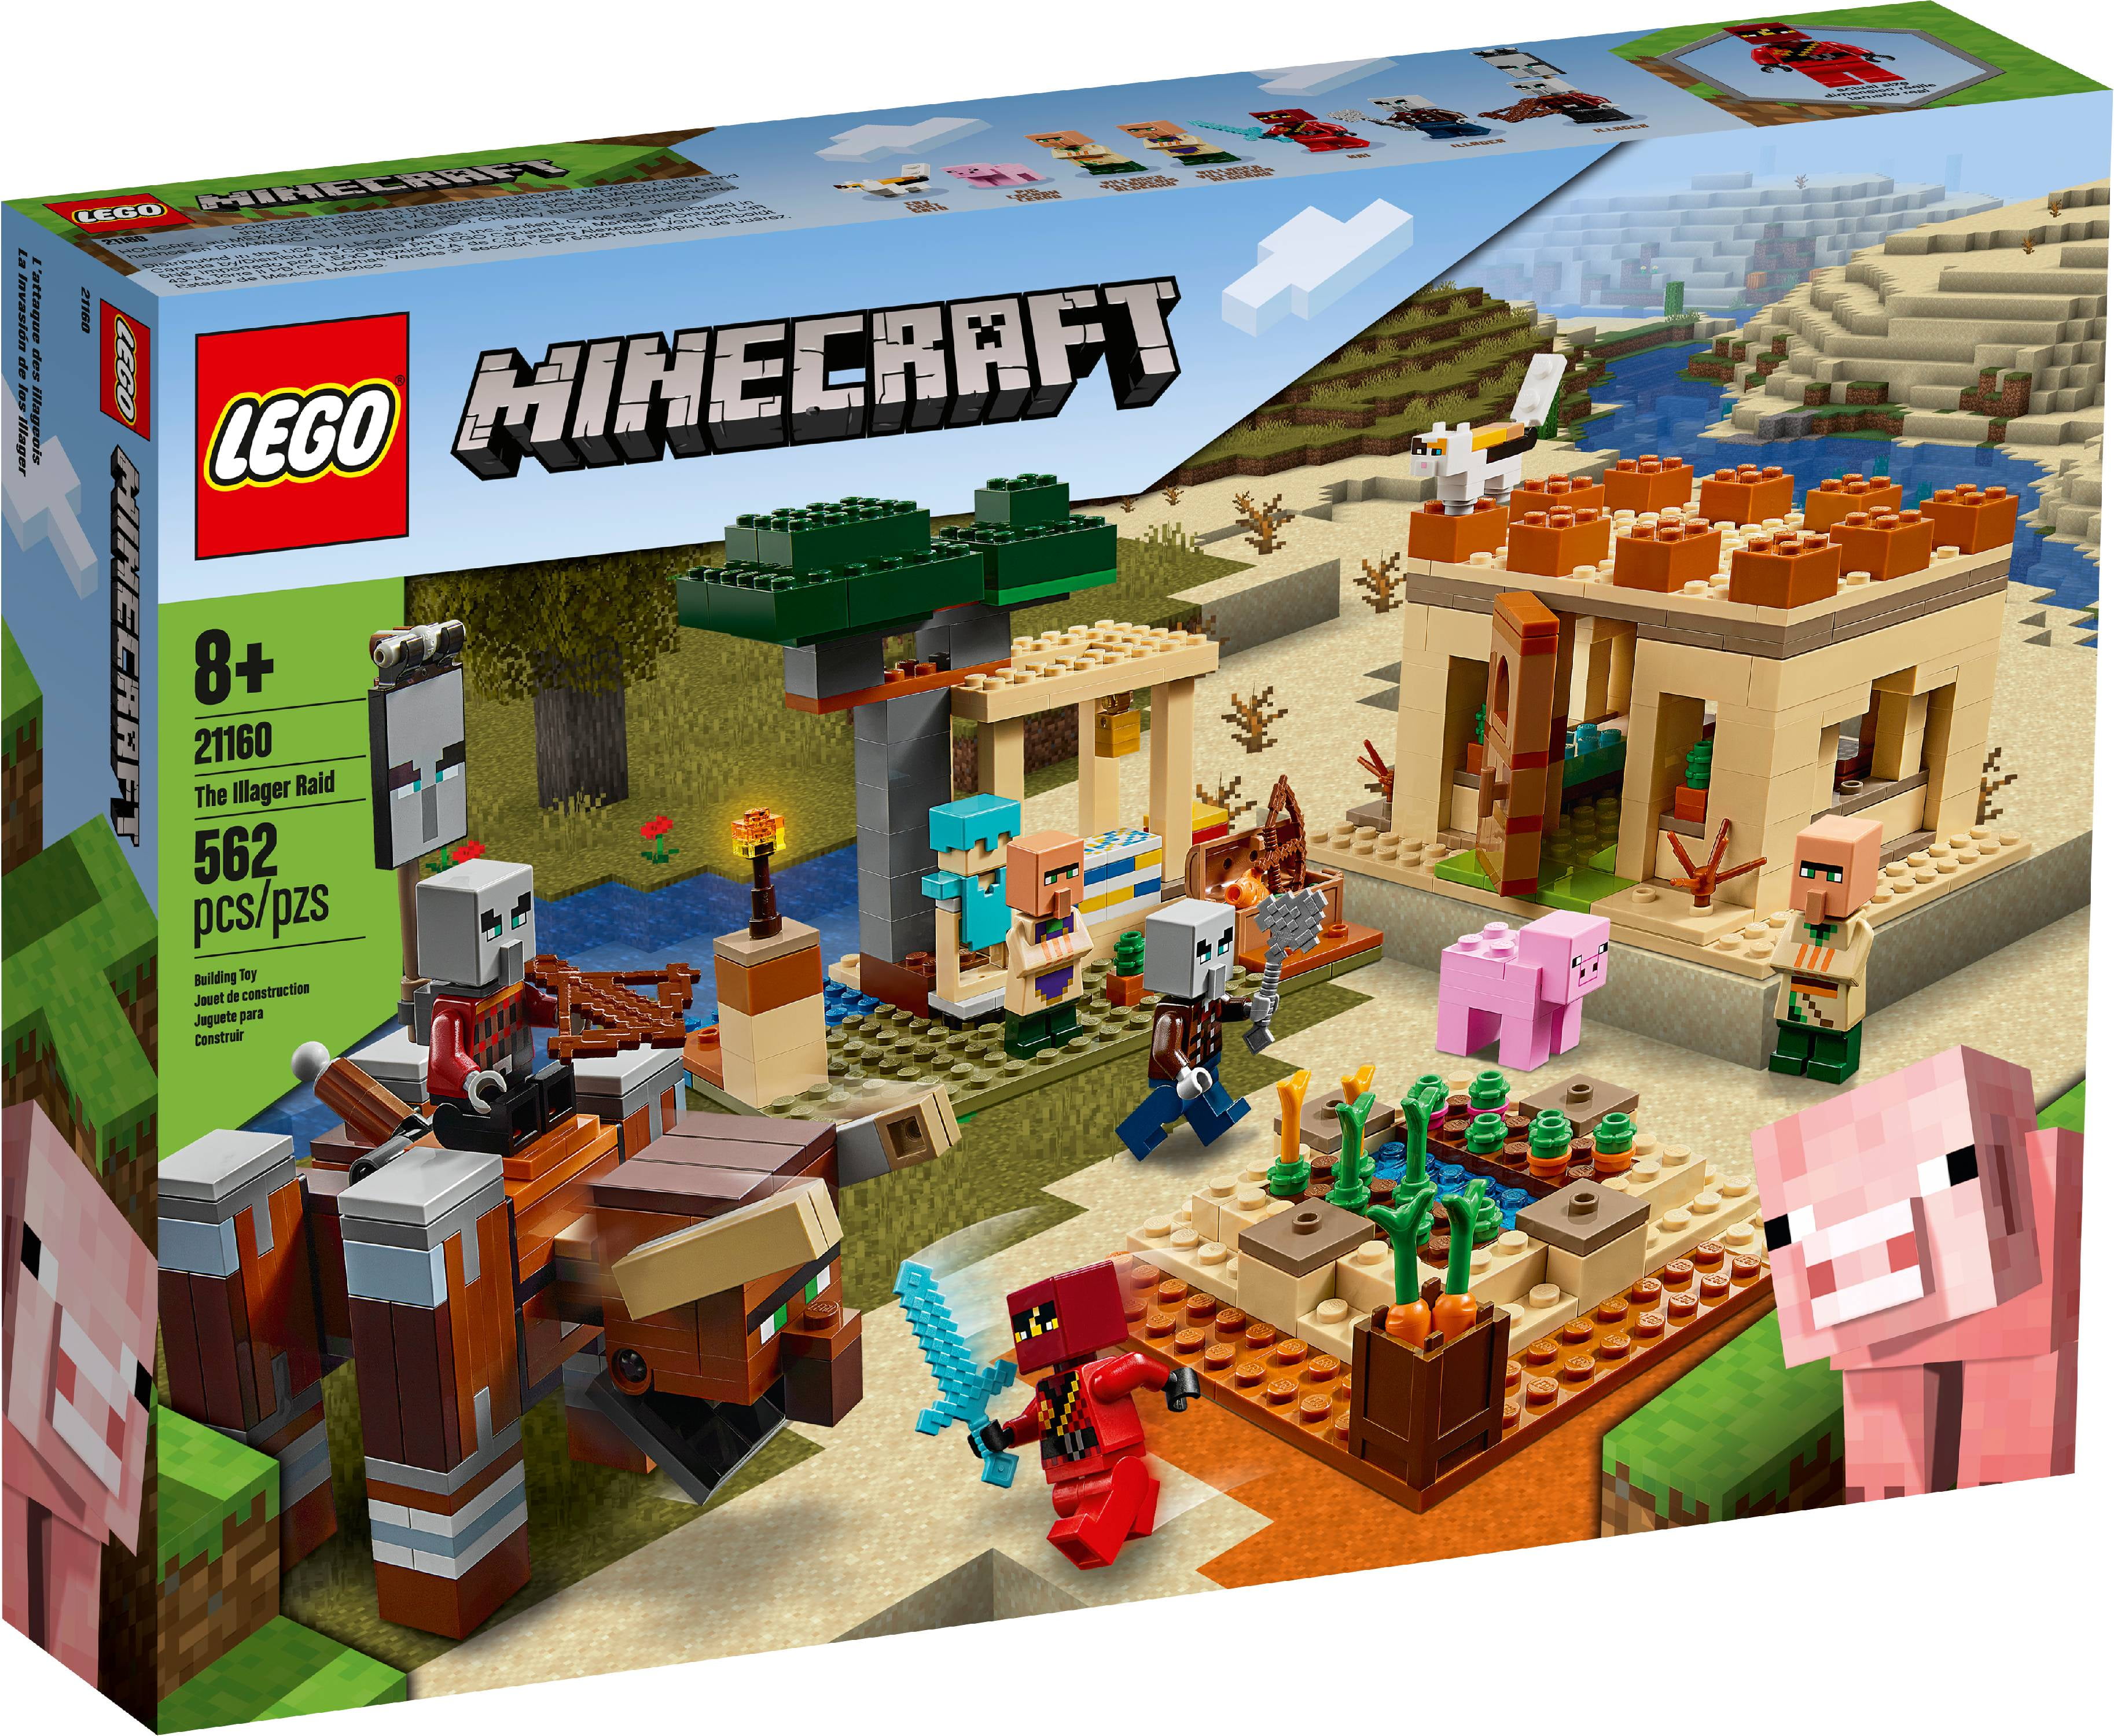 Lego Minecraft The Illager Raid 21160 Action Building Toy 562 Pieces Walmart Com Walmart Com